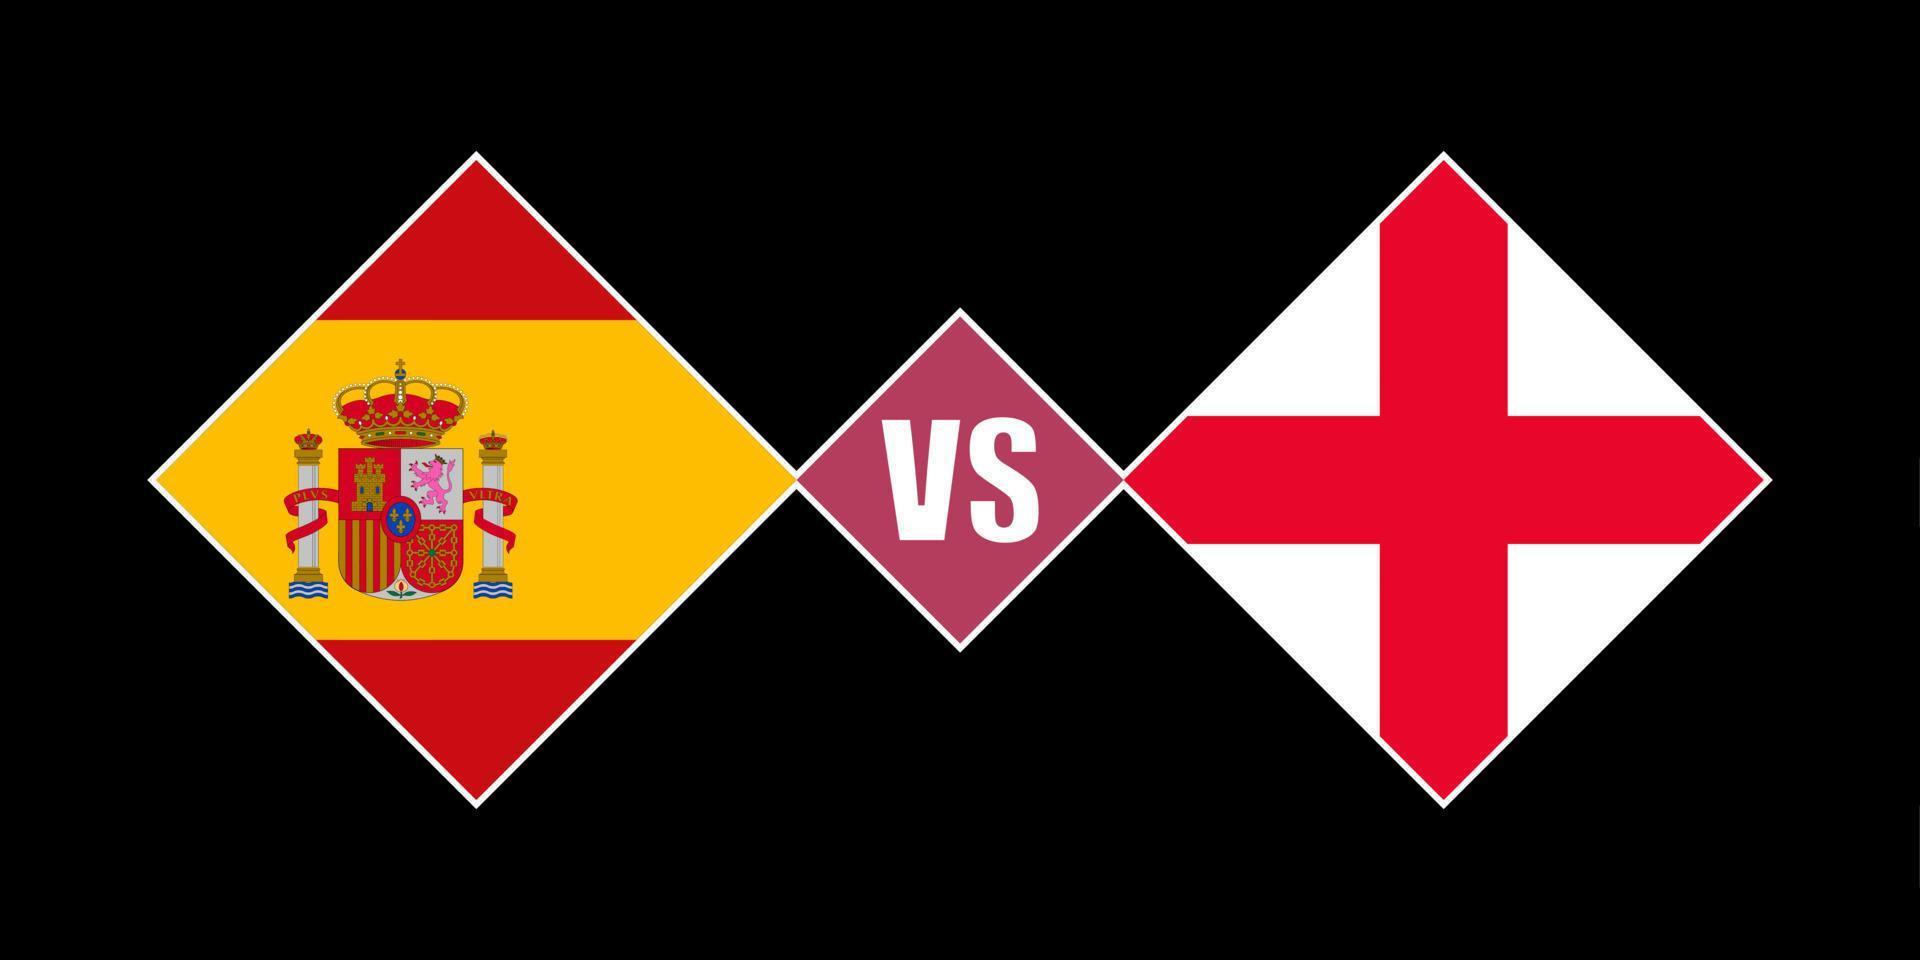 Spain vs England flag concept. Vector illustration.